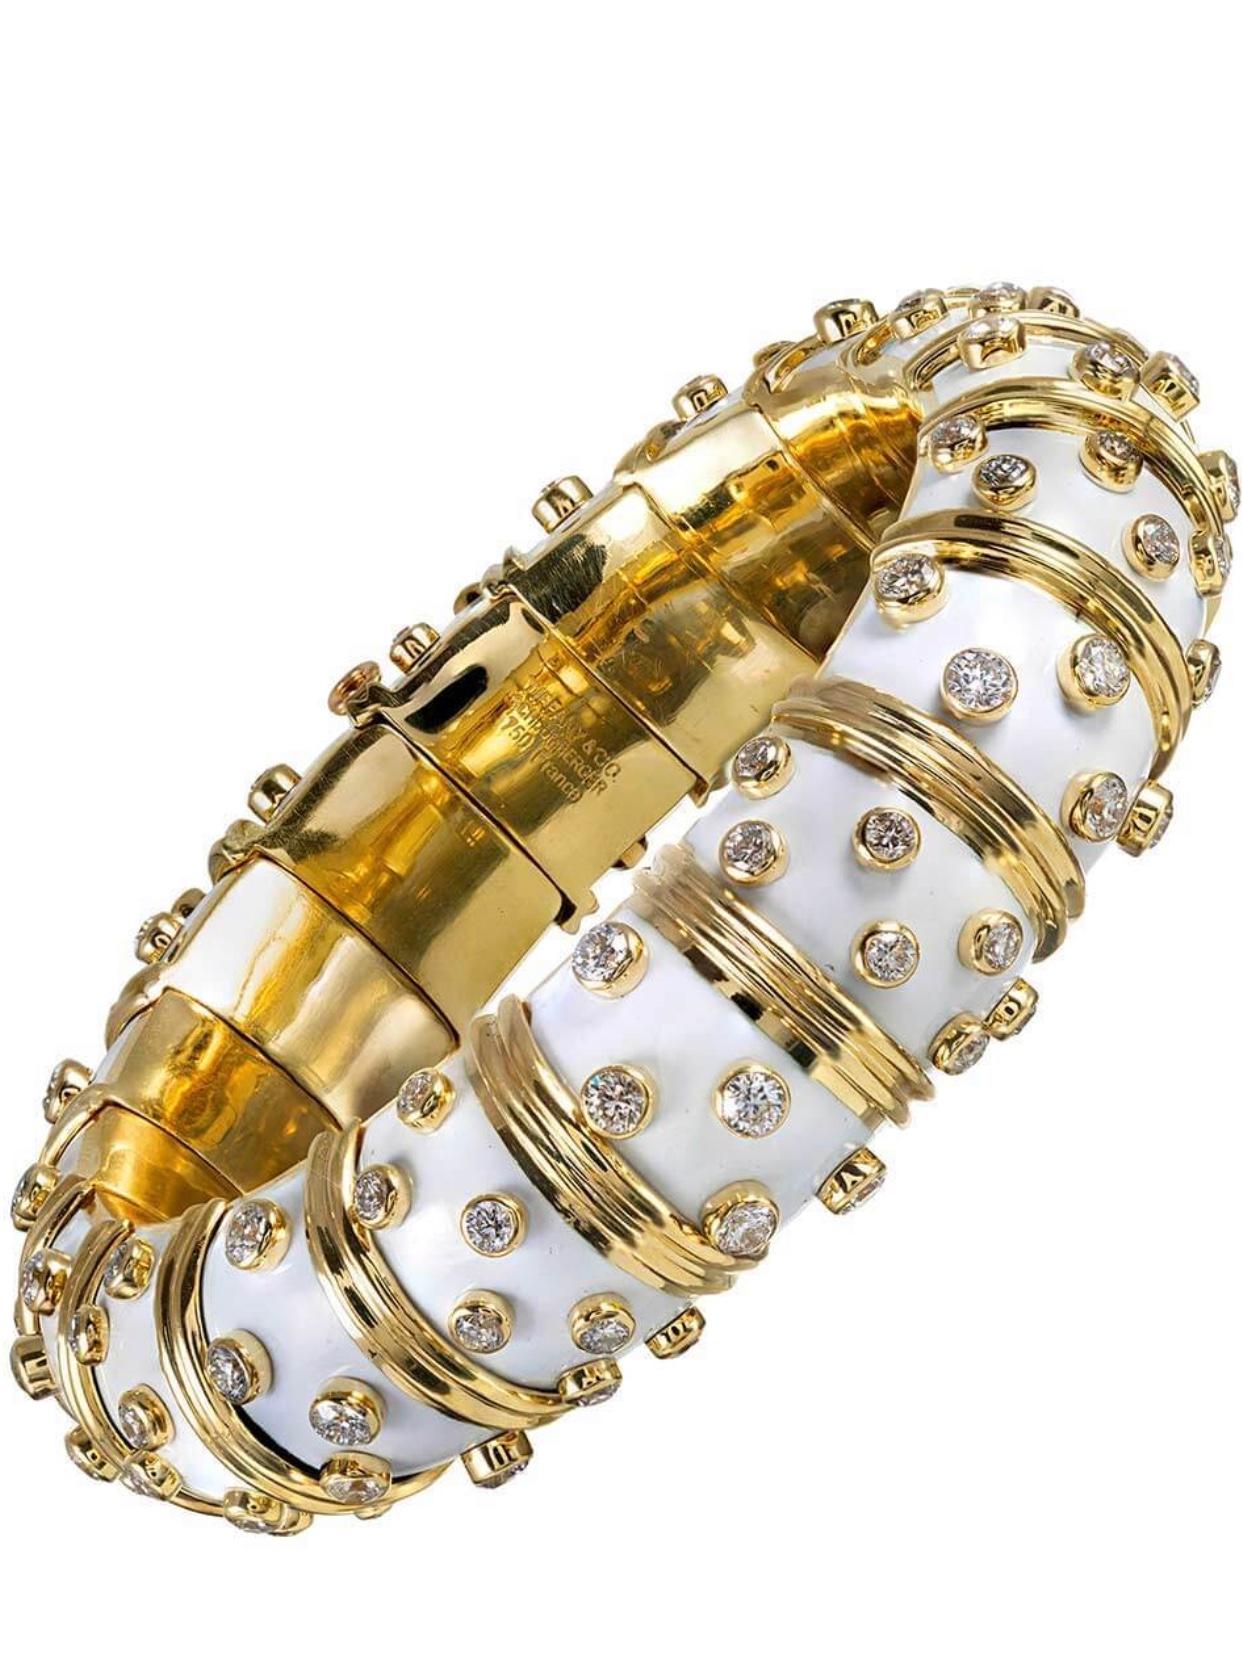 Tiffany & Co. Schlumberger White Enamel Diamond Bangle Bracelet, 21st Century 2